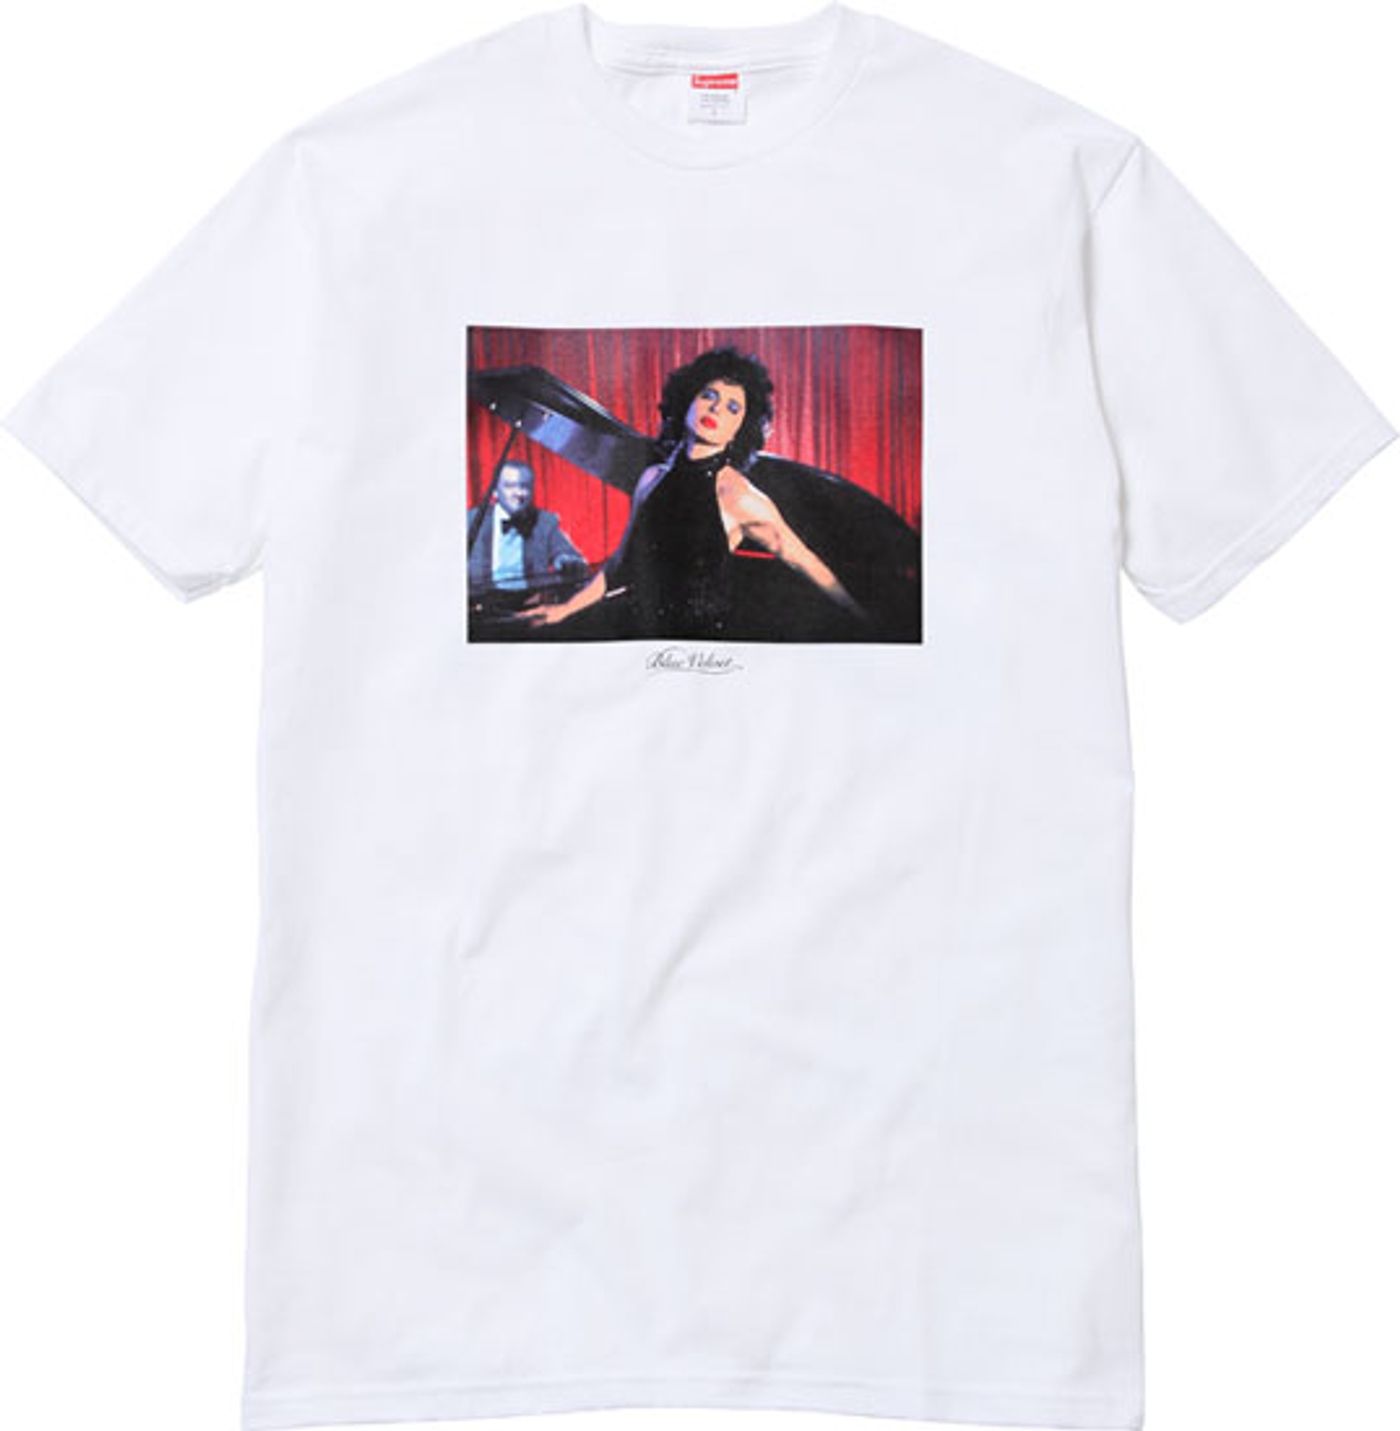 David Lynch for Supreme 
All cotton classic Supreme t-shirt (1/7)